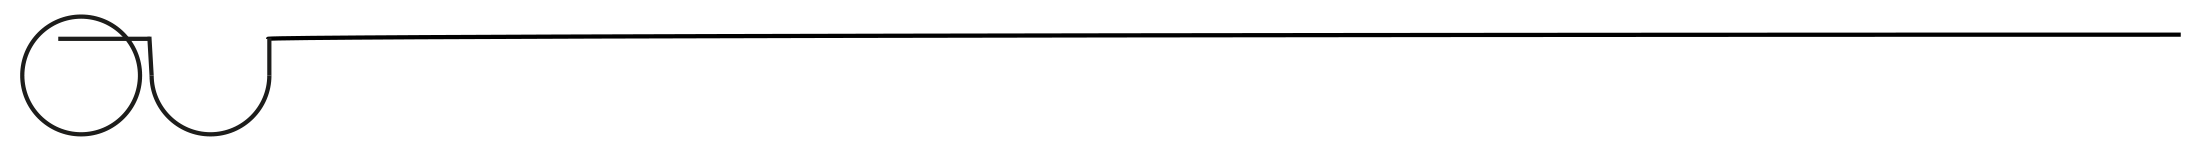 õu logo